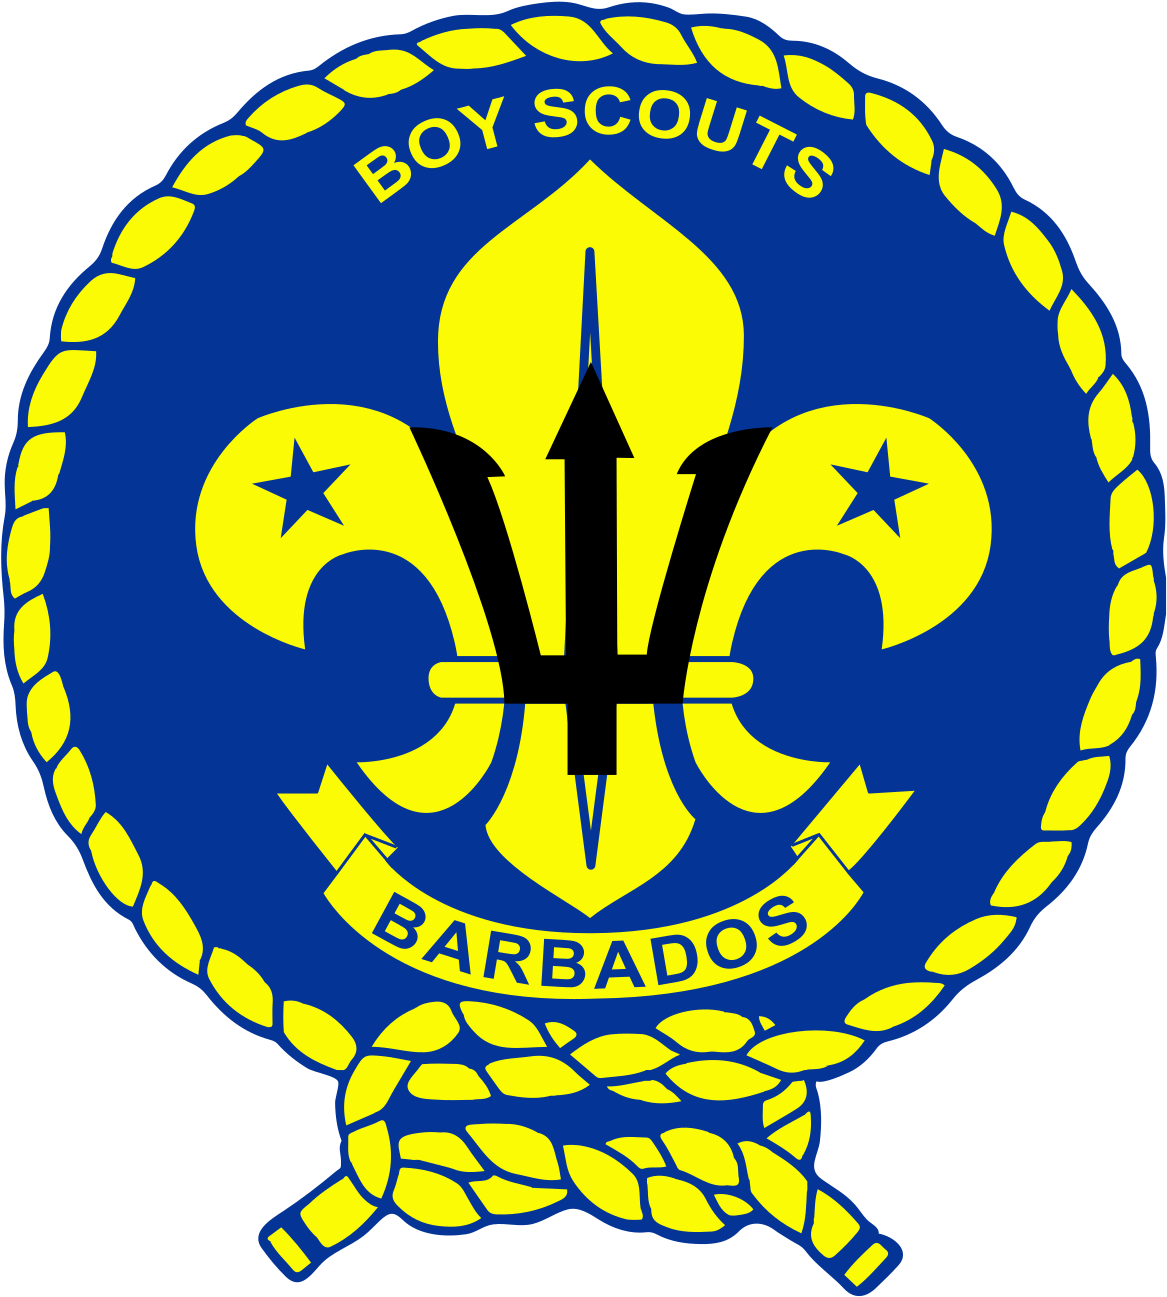 Barbados Boy Scouts Emblem PNG